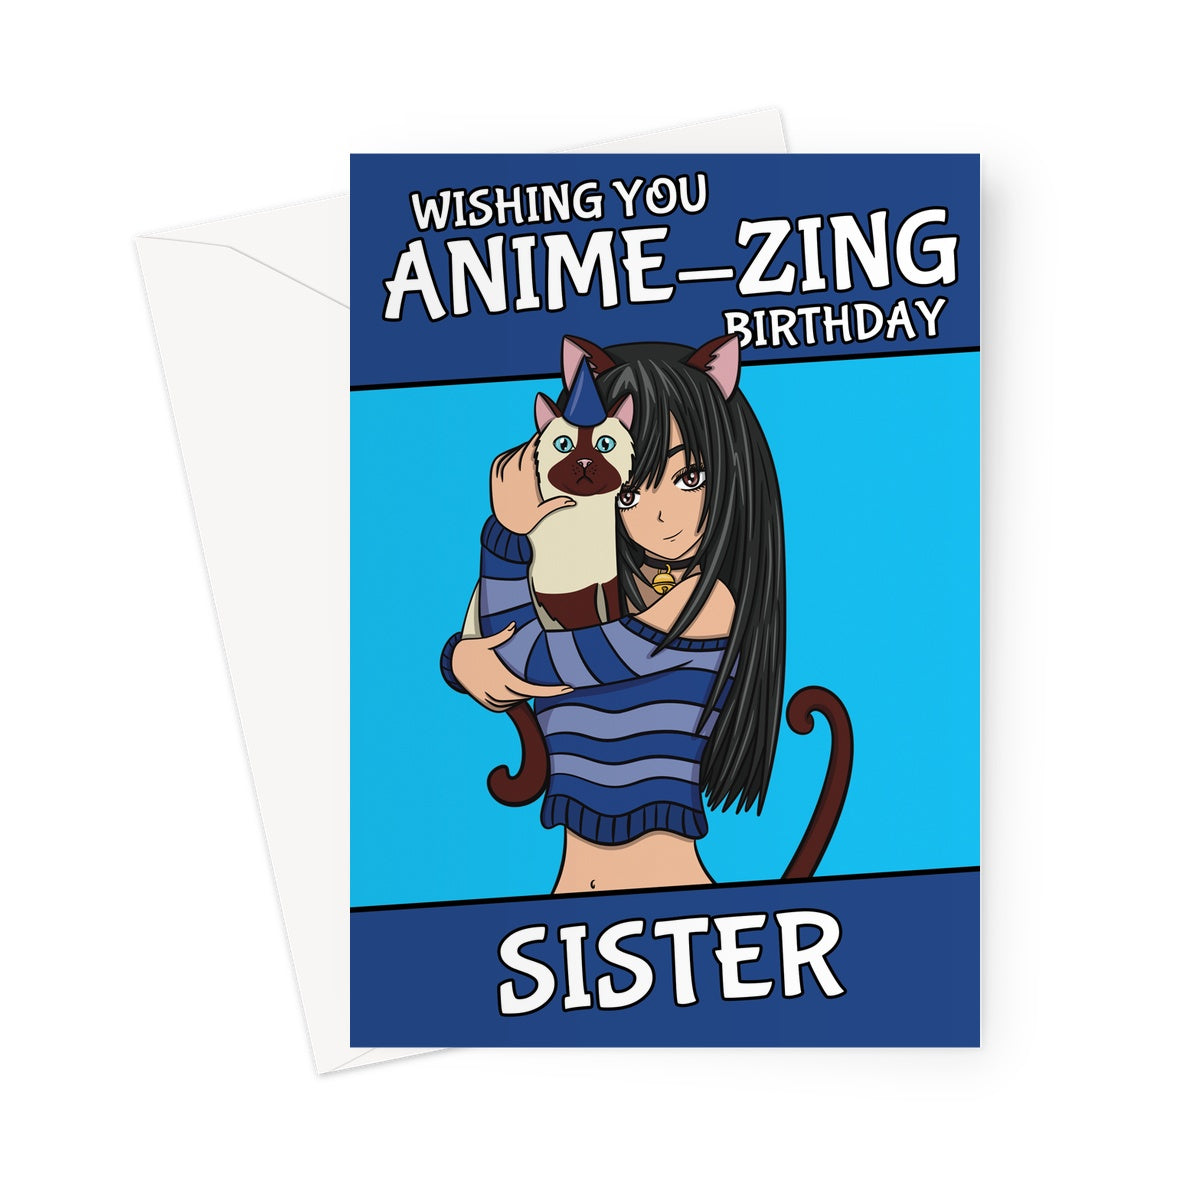 Amazing Sister Anime Birthday Card